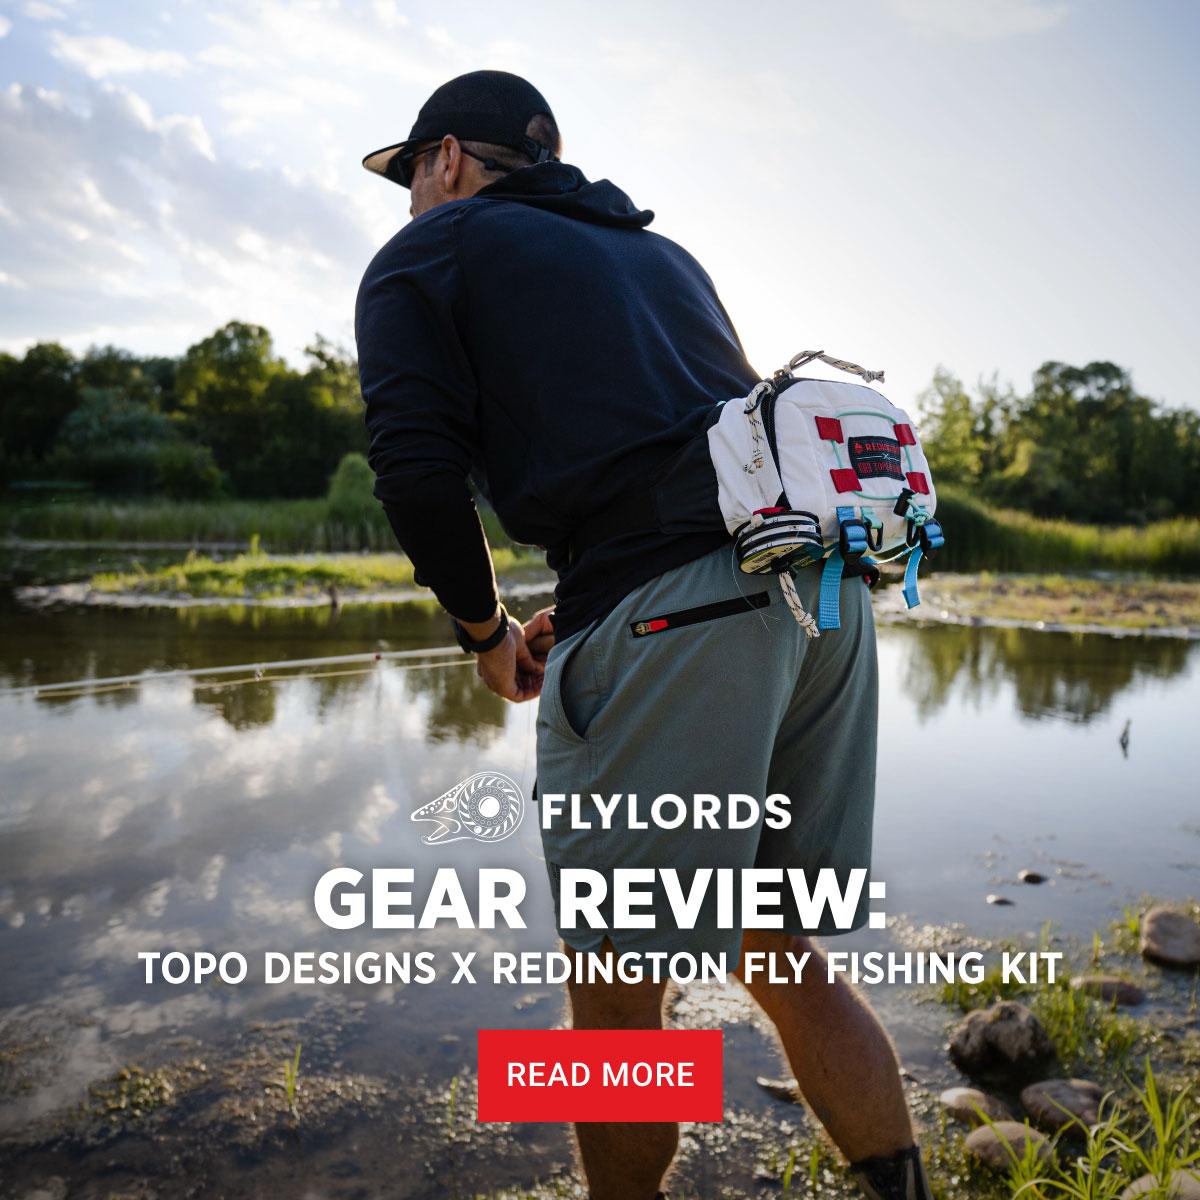 Flylords Review: Topo Designs x Redington Fly Fishing Kit - Topo